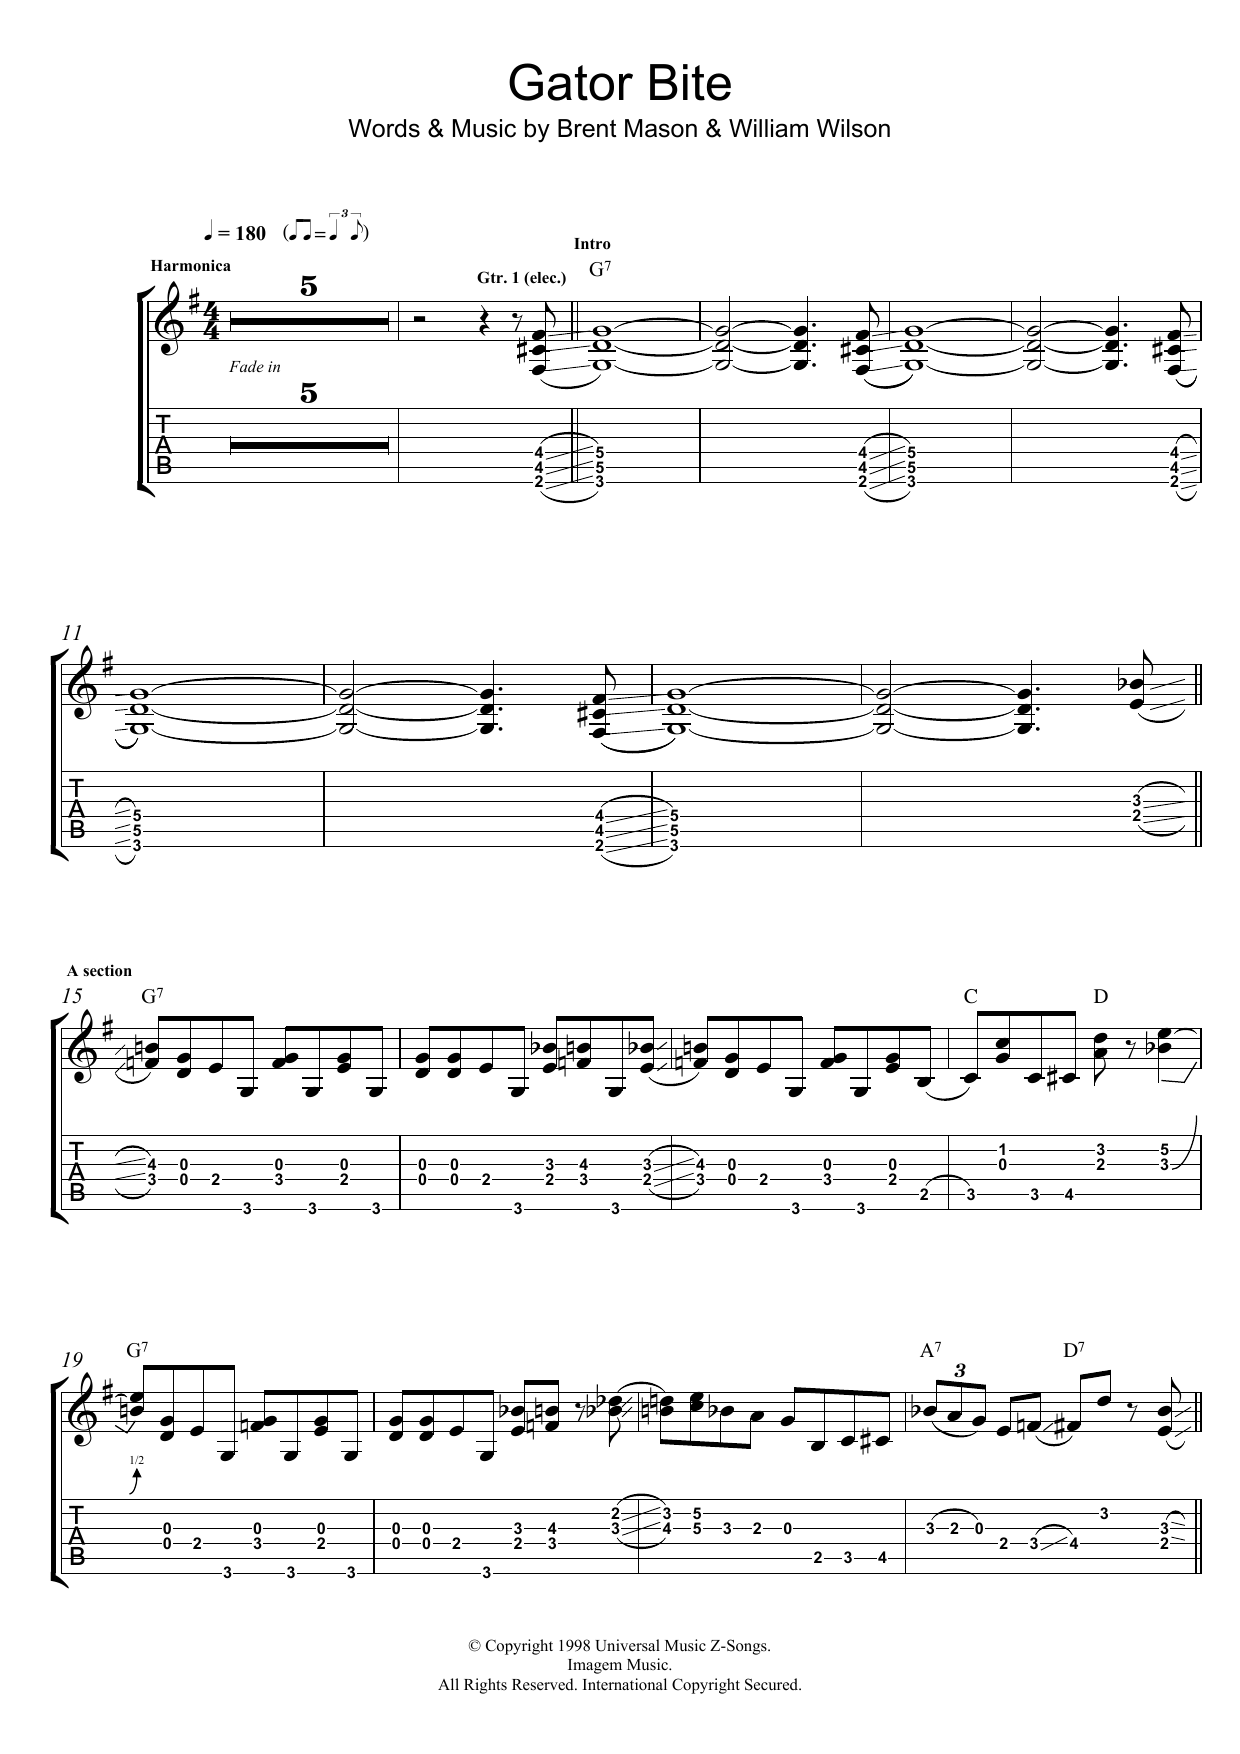 Brent Mason Gator Bite Sheet Music Notes & Chords for Guitar Tab - Download or Print PDF